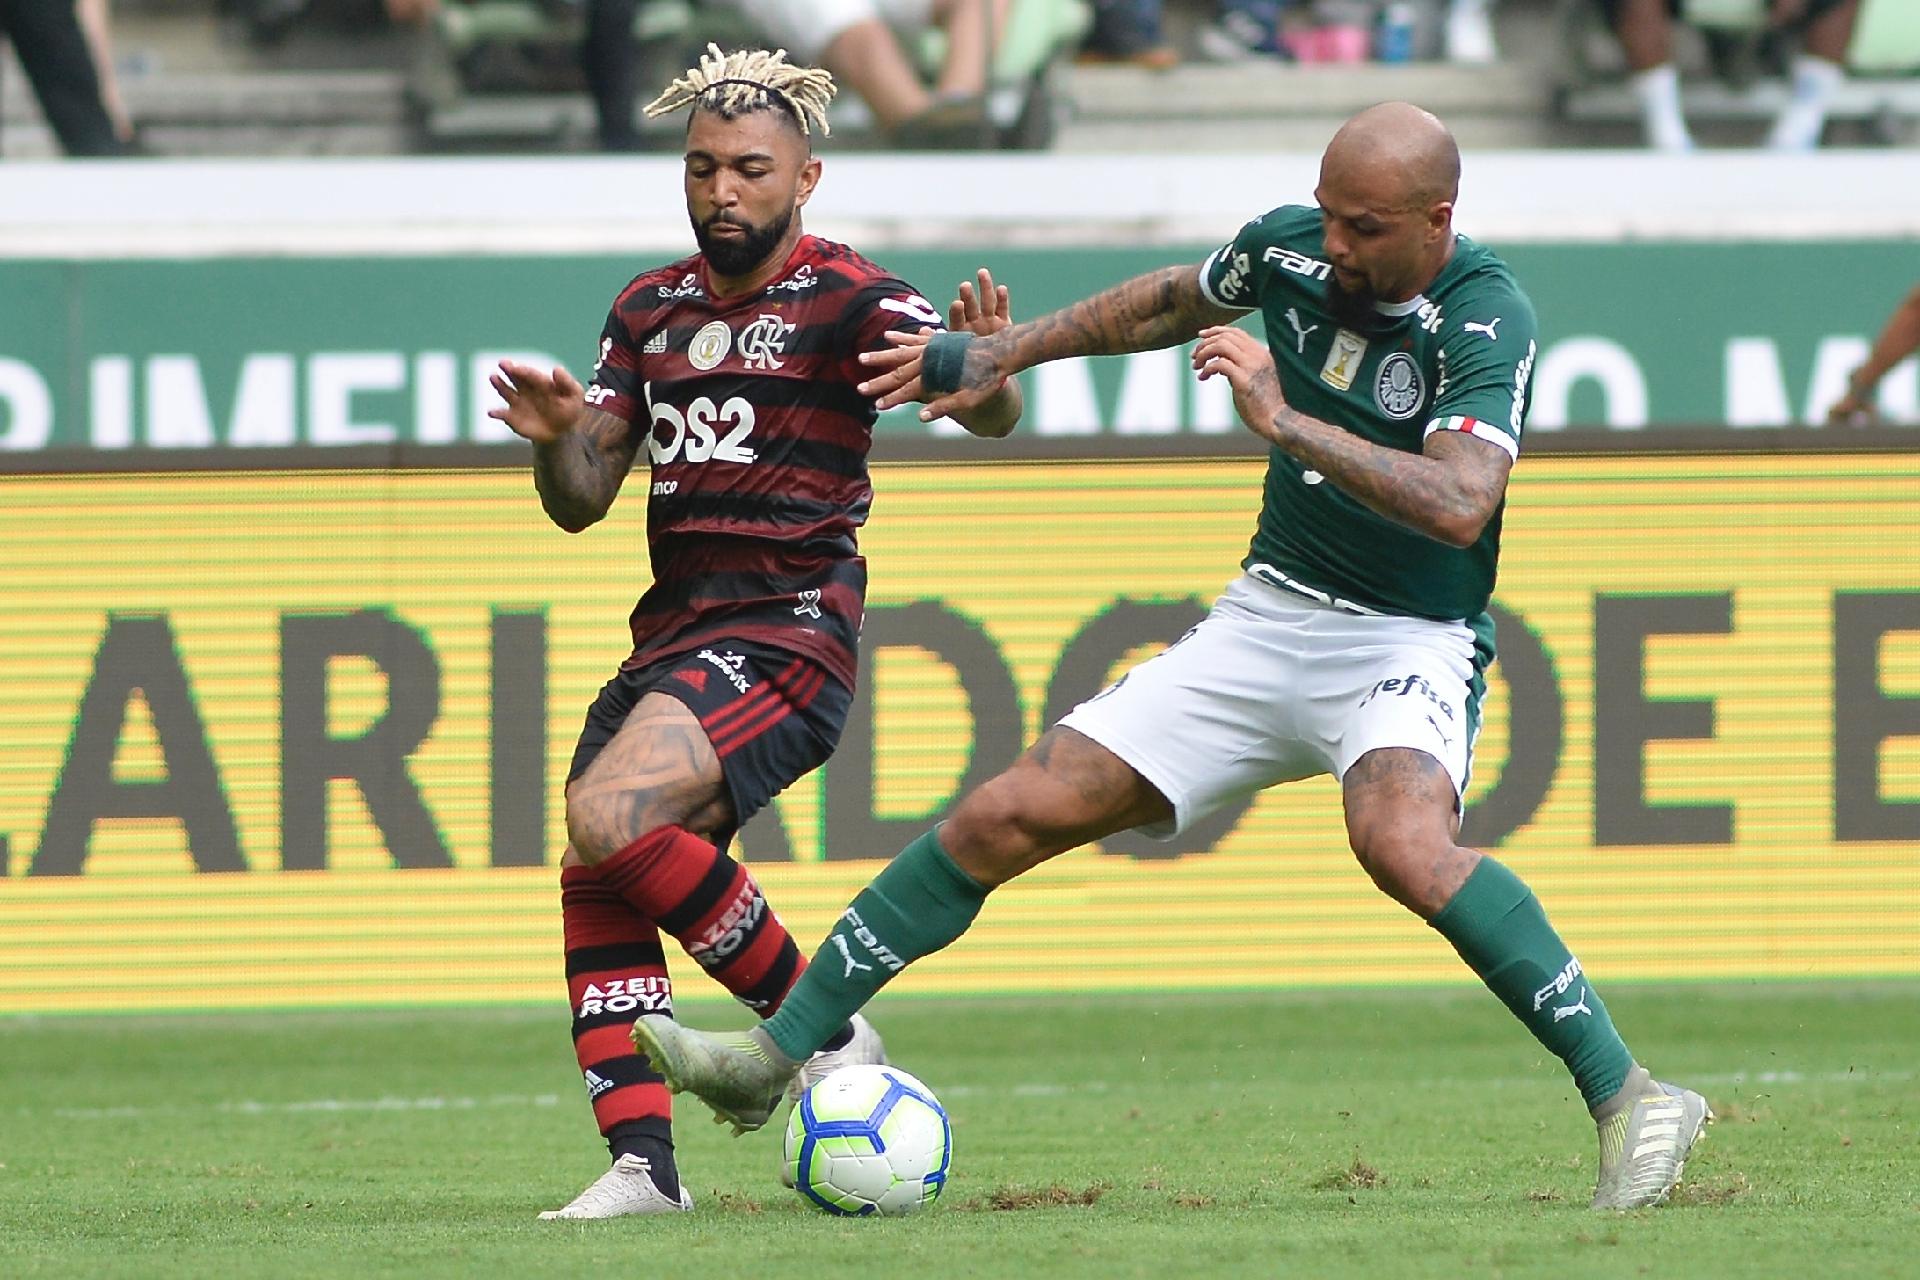 Soi-keo-du-doan Flamengo vs Palmeiras